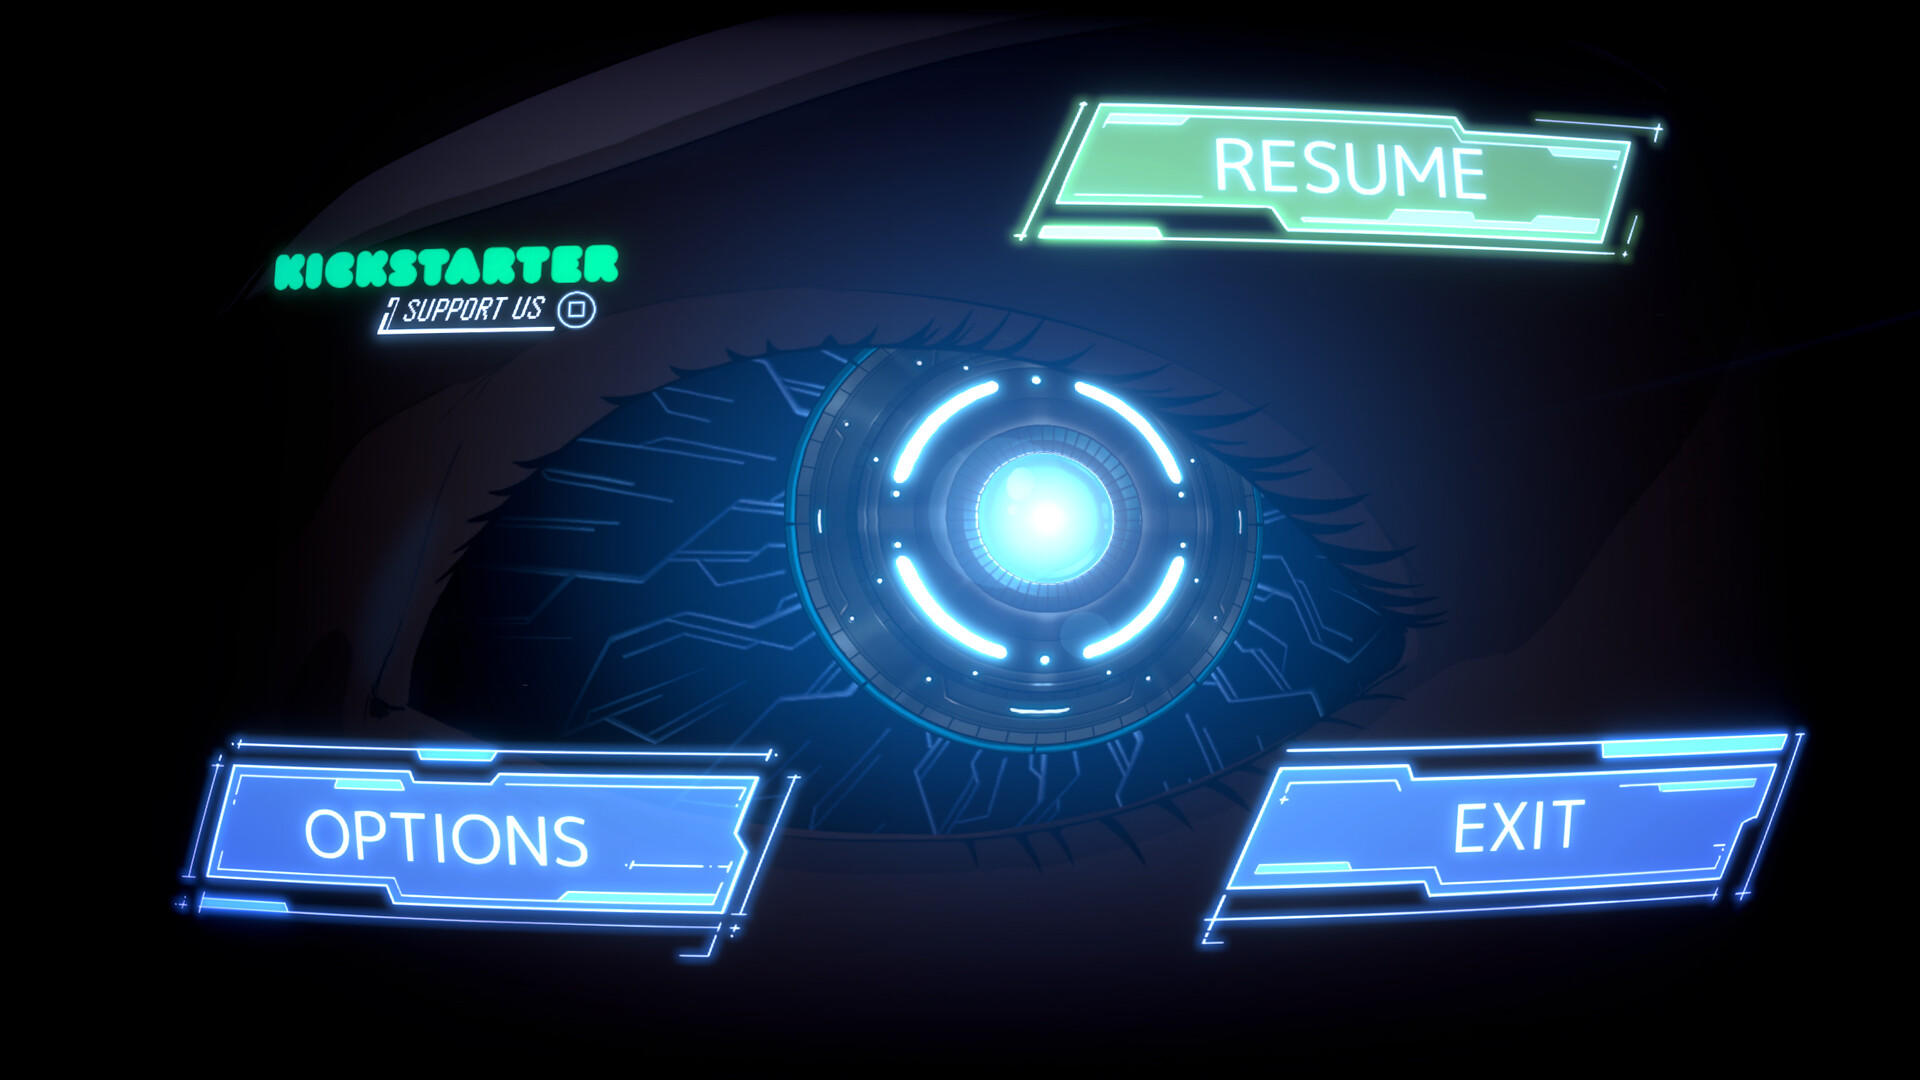 Eden Genesis screenshot game